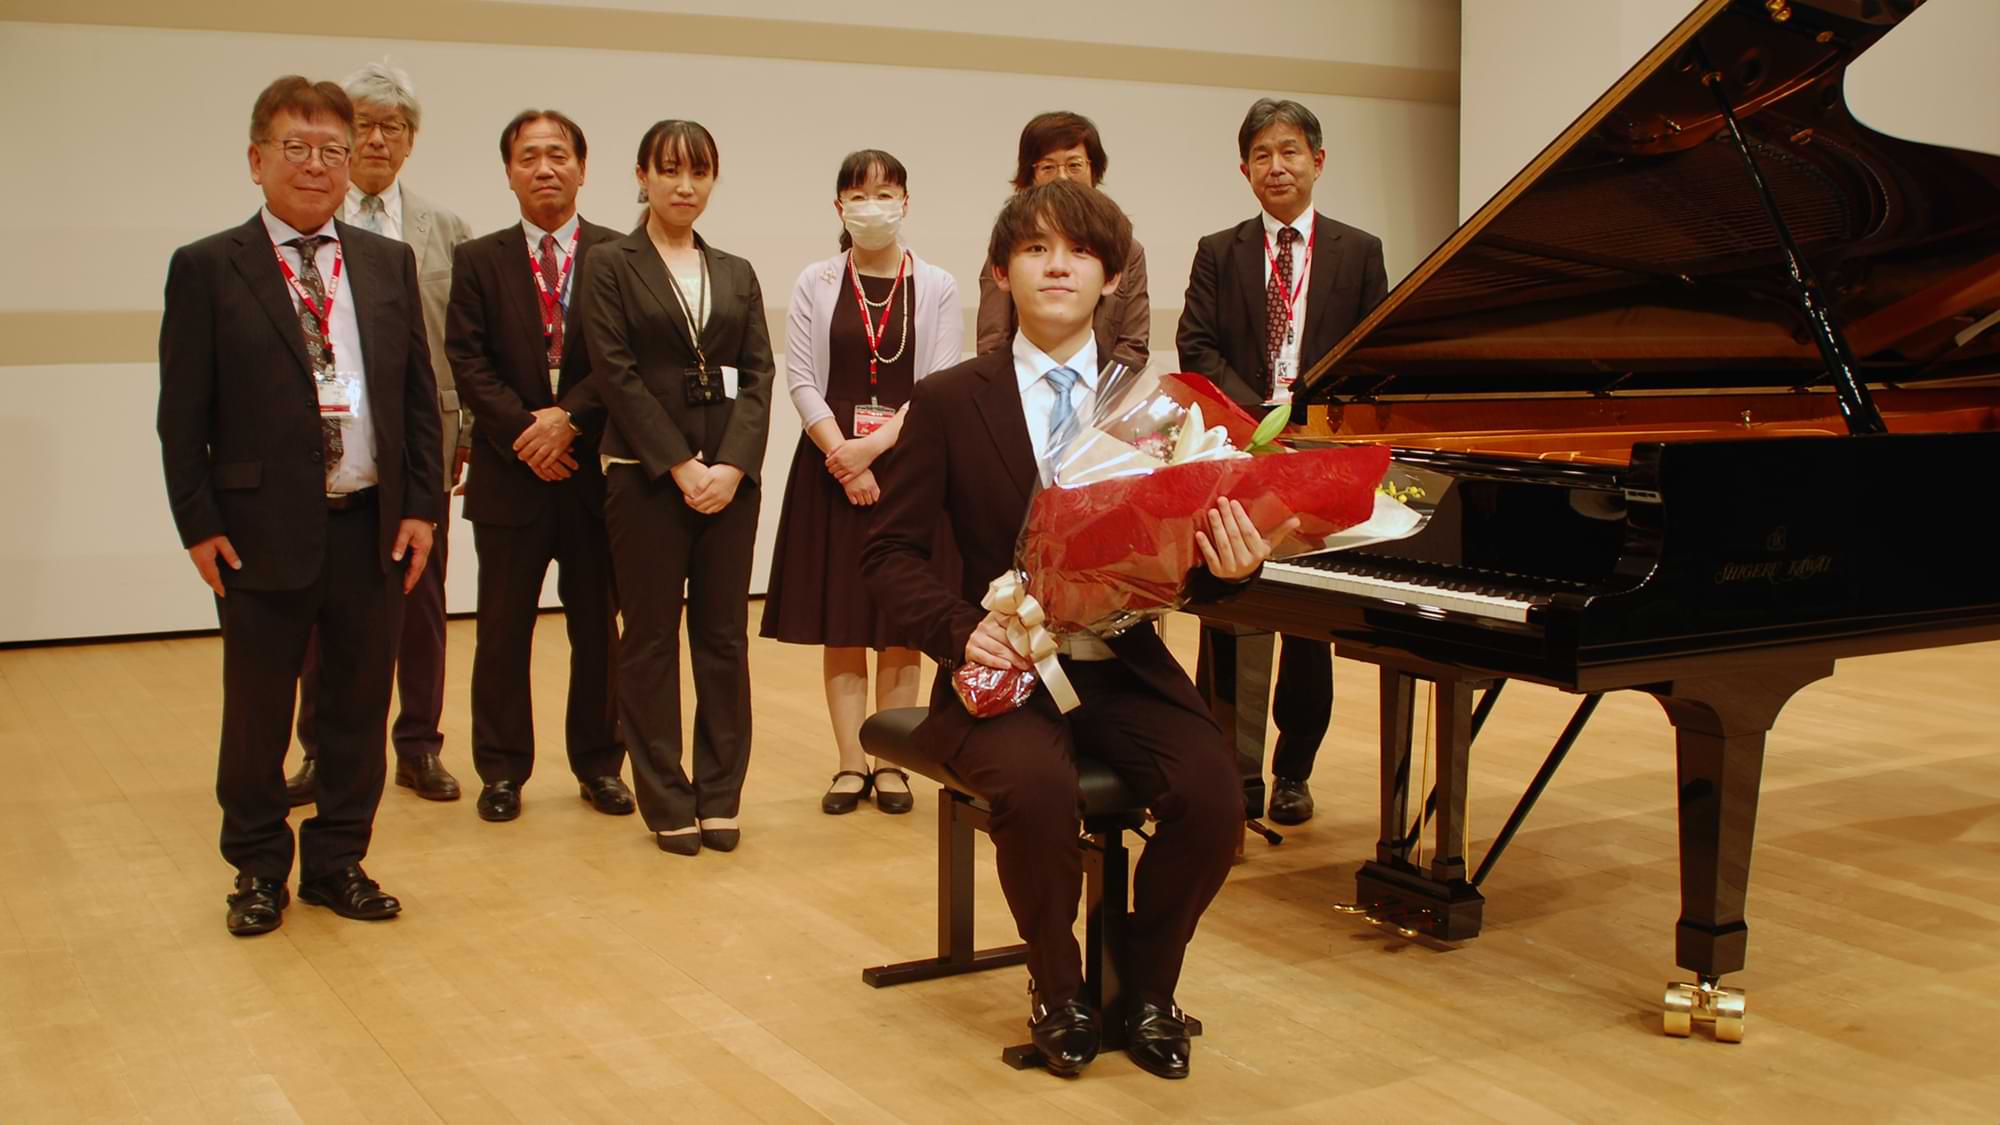 Masaya Kamei performance at Hiroshima